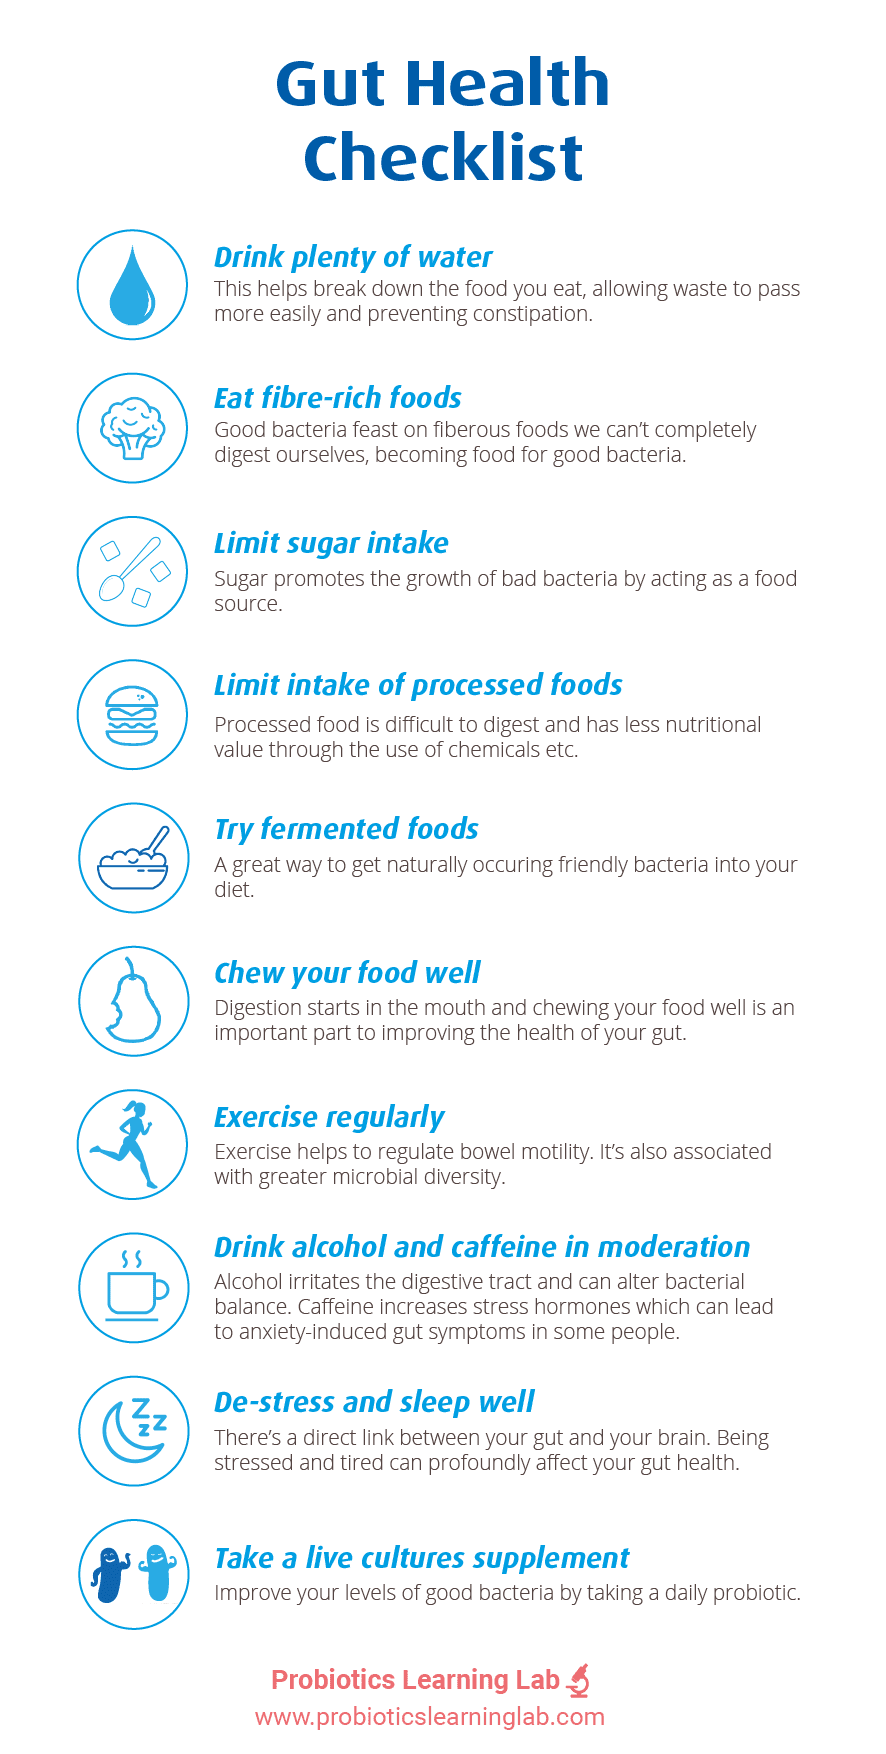 Gut health checklist | Probiotics Learning Lab